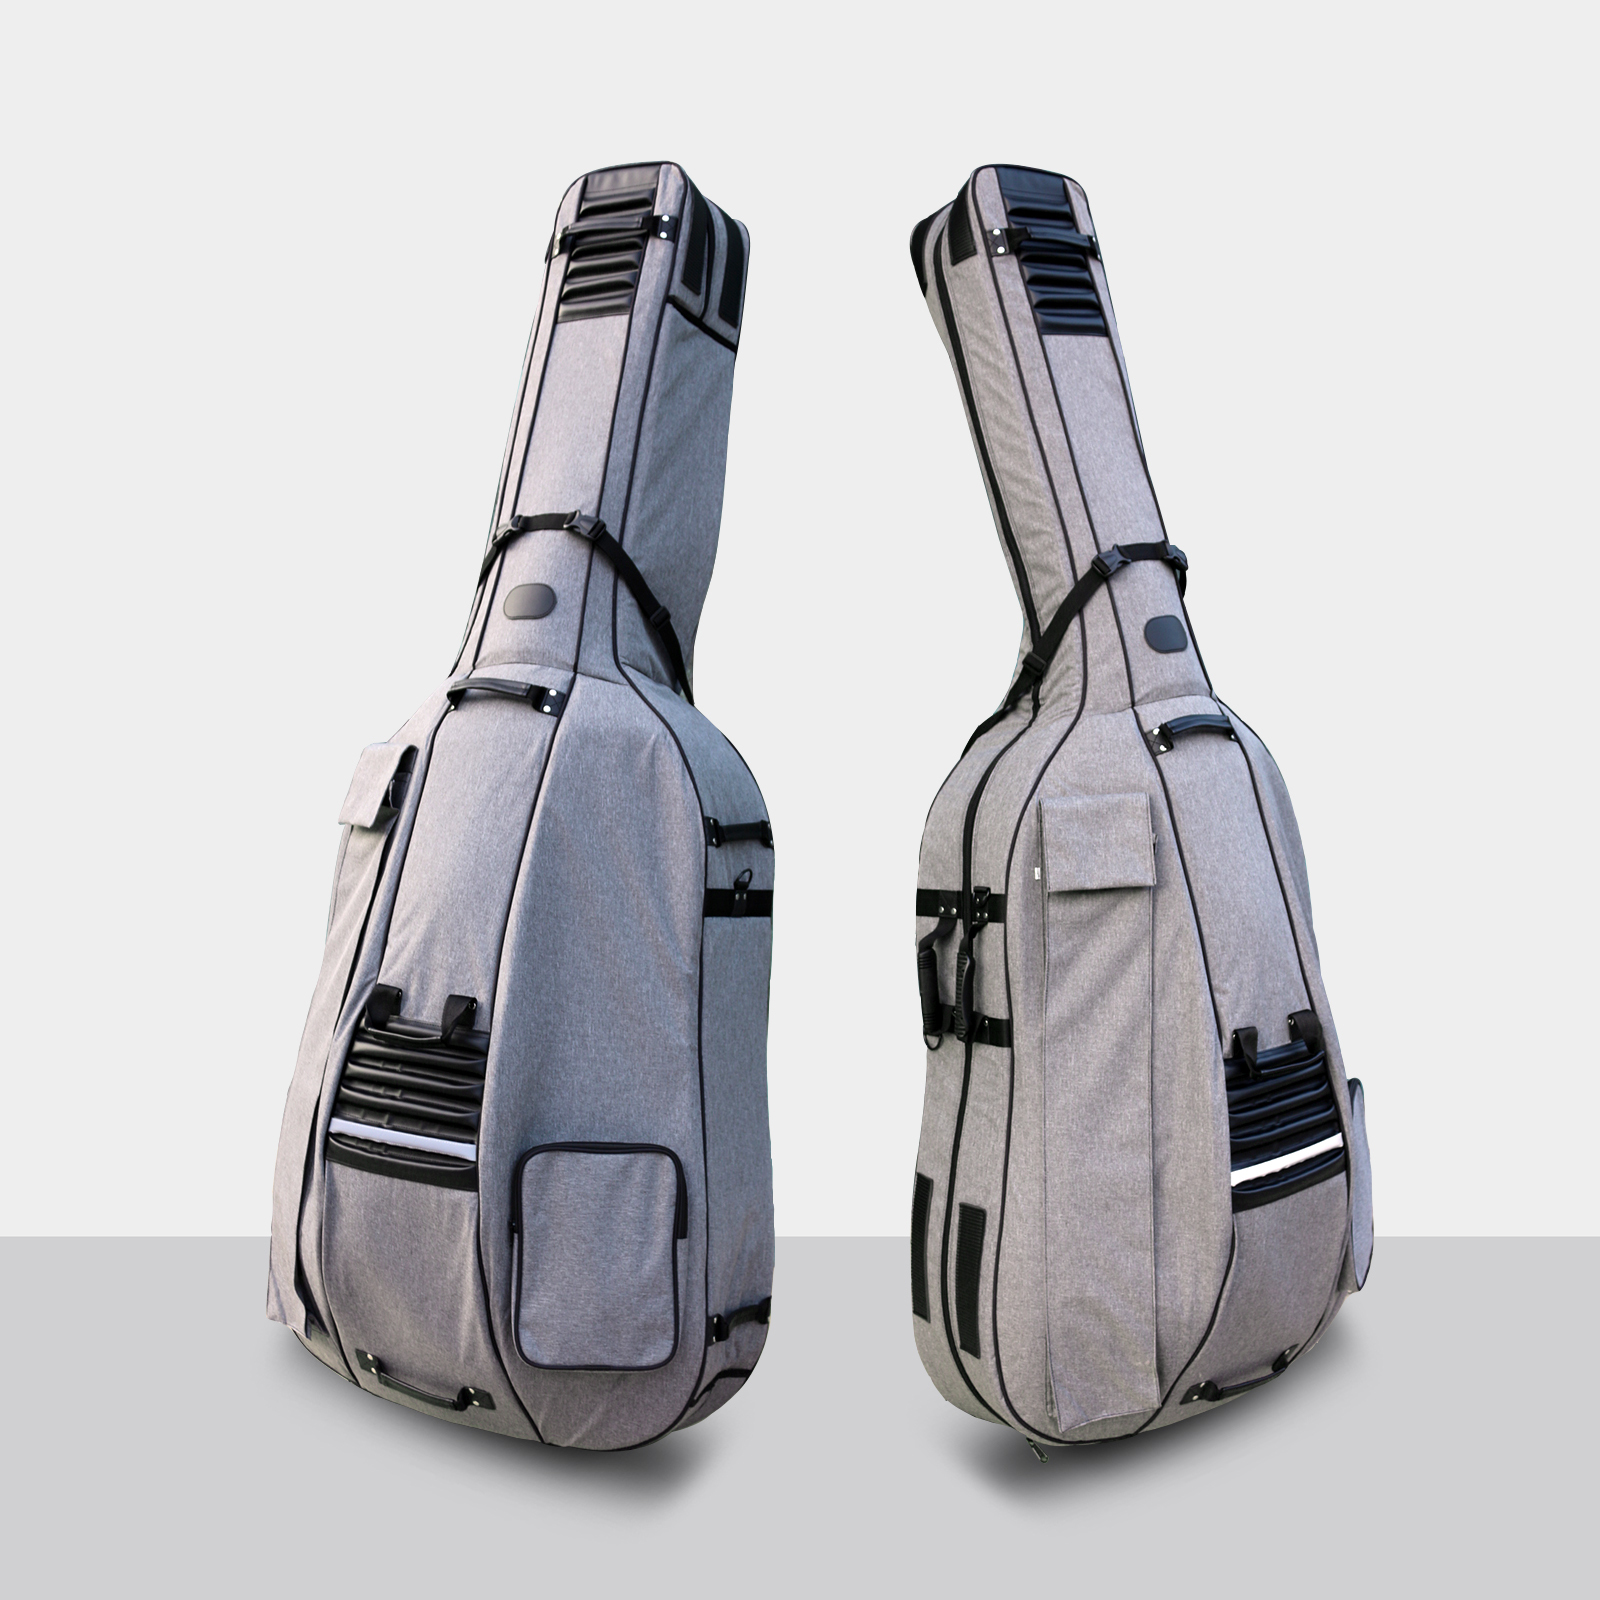 yinfente 2pcs Replacement Shoulder Strap Padded Universal Adjustable Bag  Strap with Hooks for Laptop Violin case